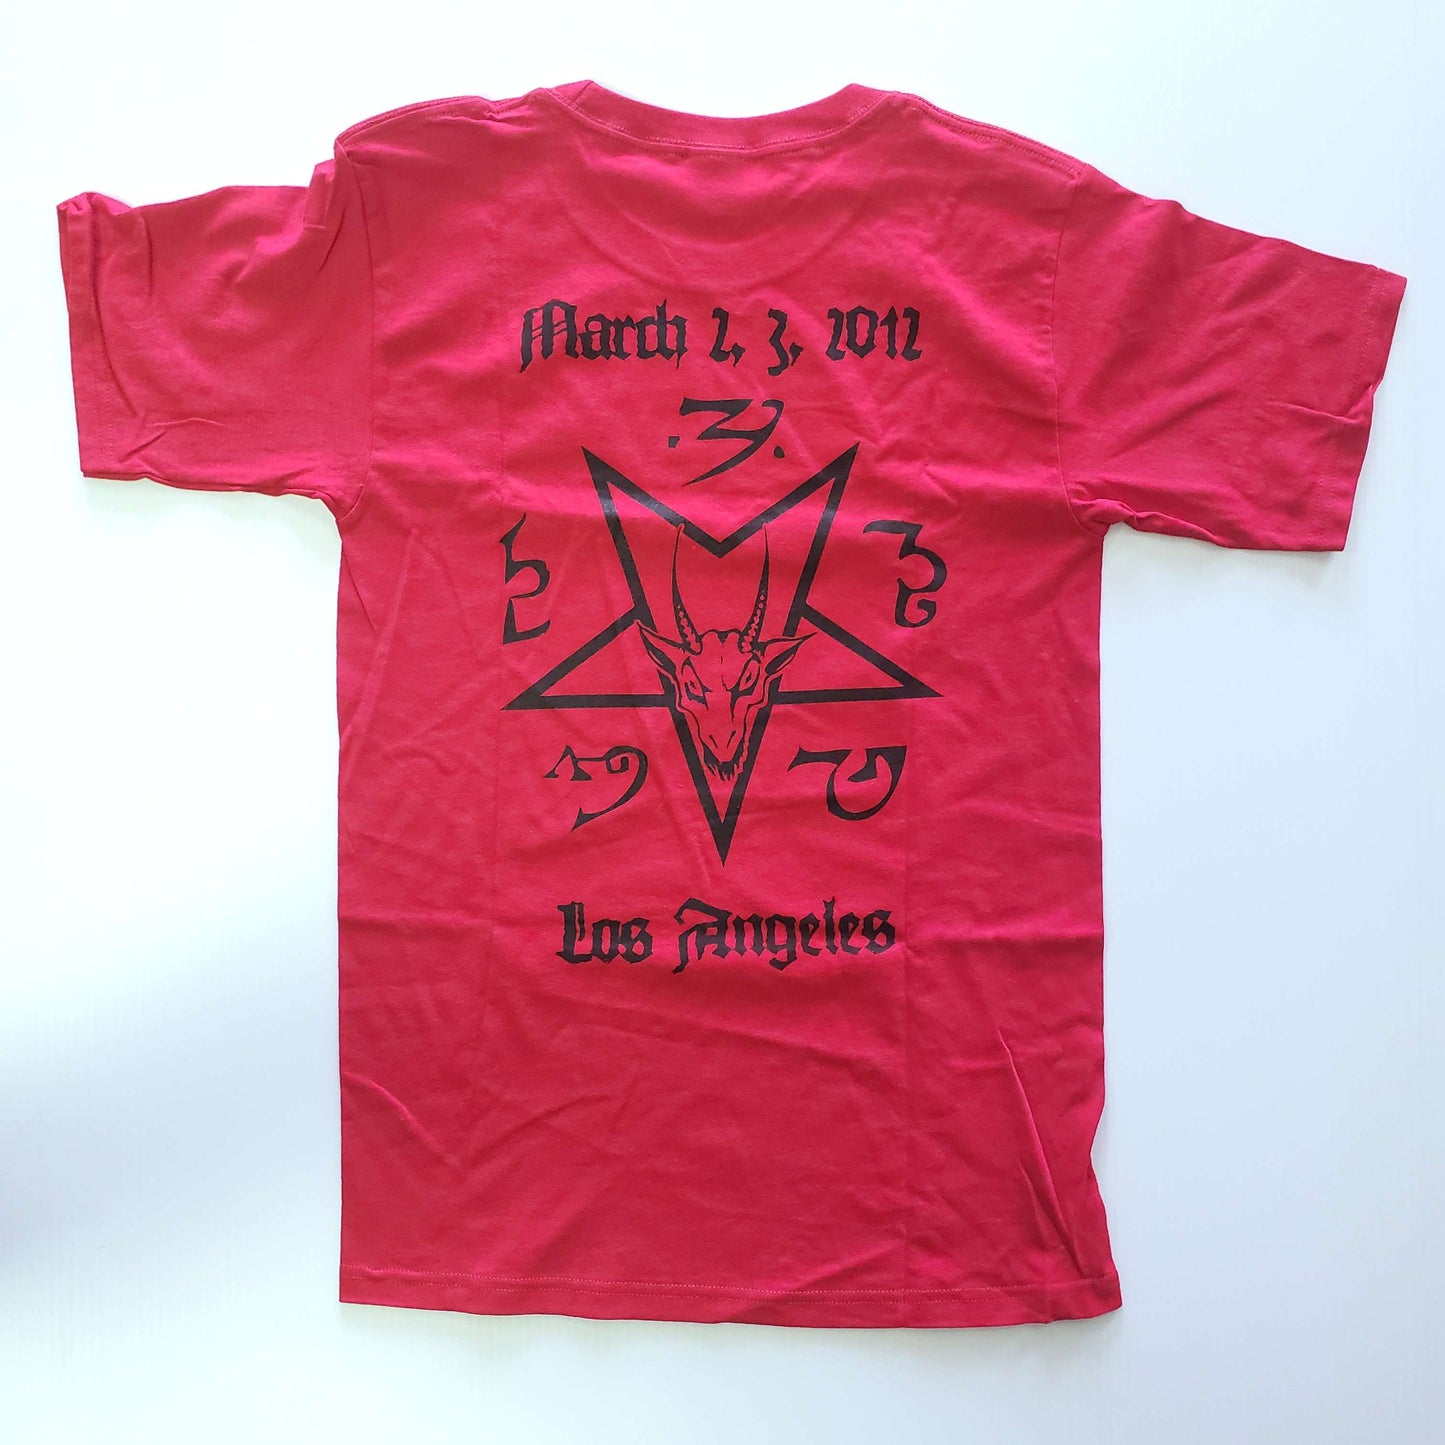 NunSlaughter - 2012 Concert size small T-shirt